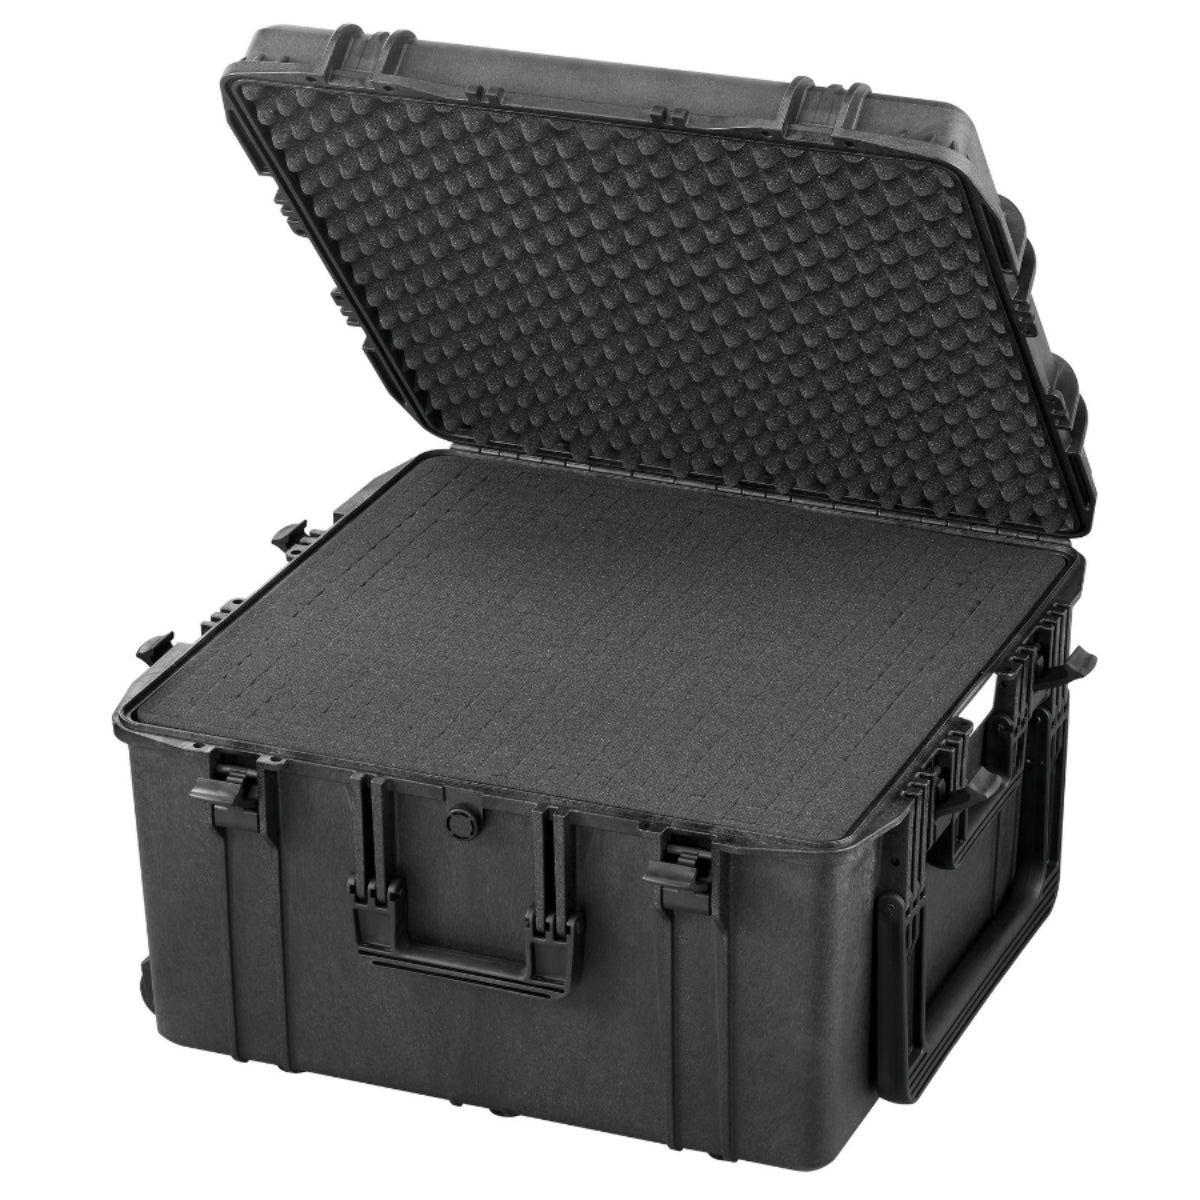 SP PRO 615S Black Carry Case, Cubed Foams, ID: L615xW615xH360mm